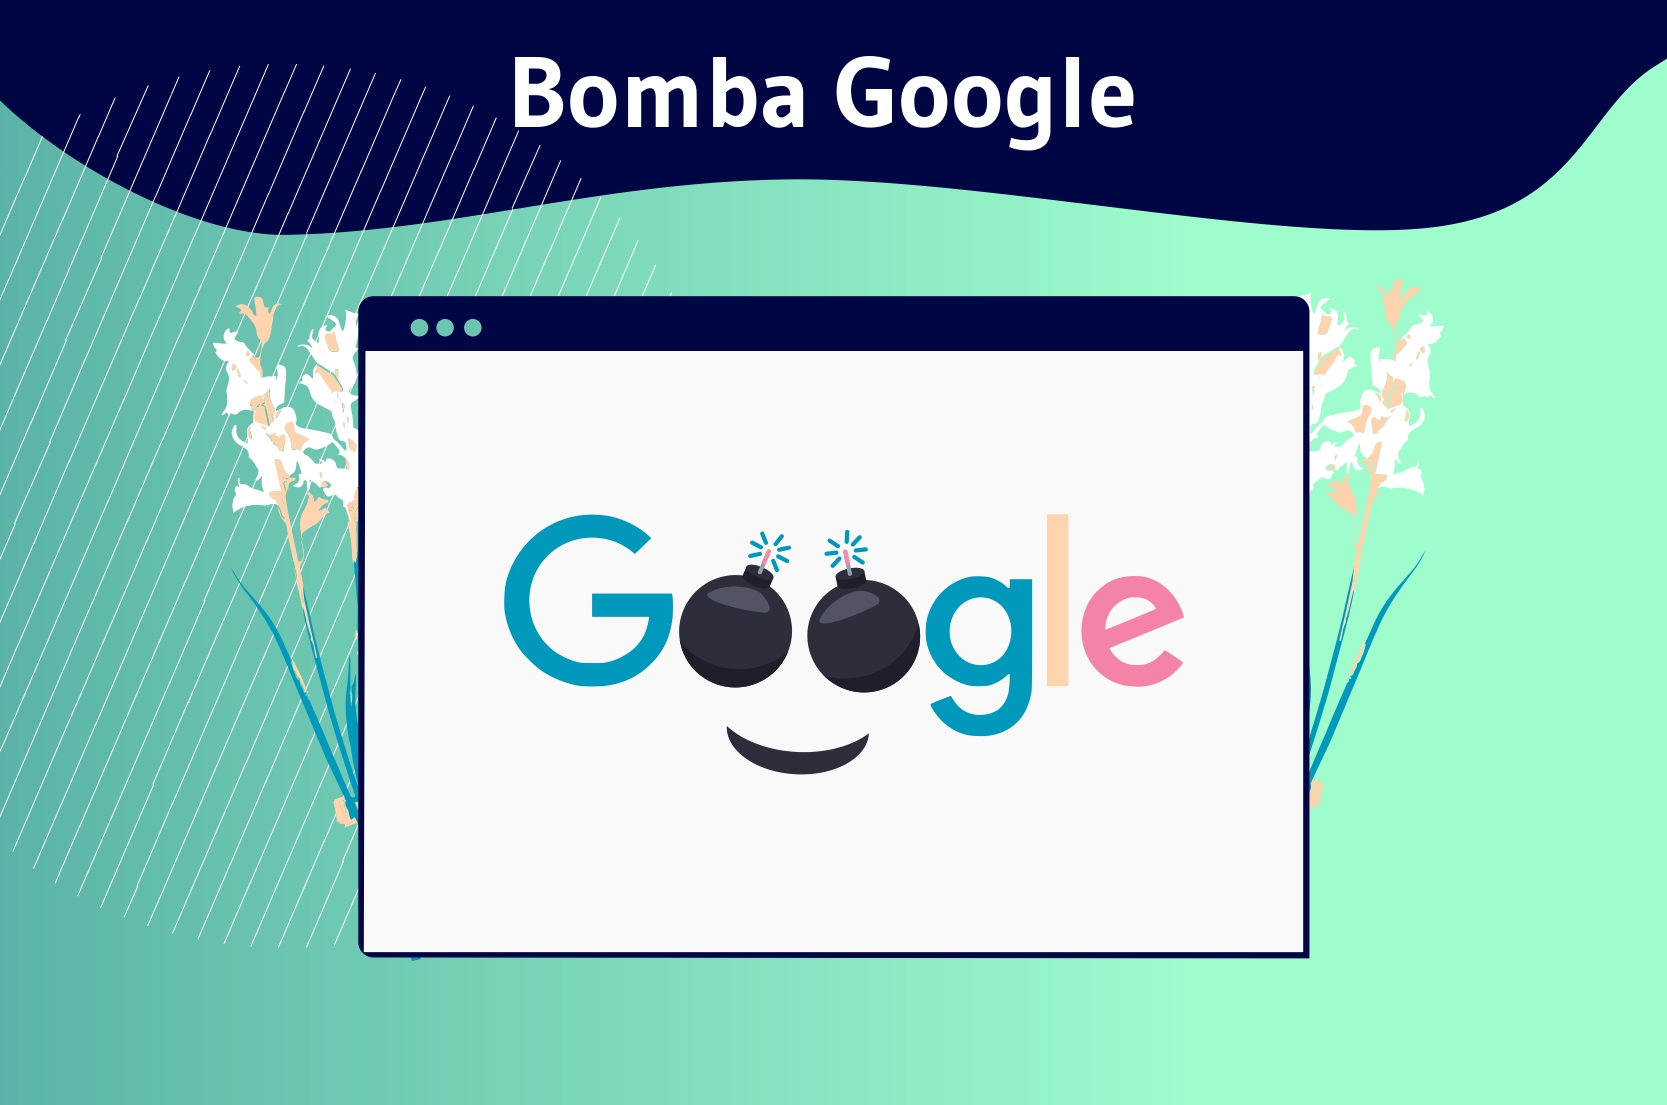 Bomba Google